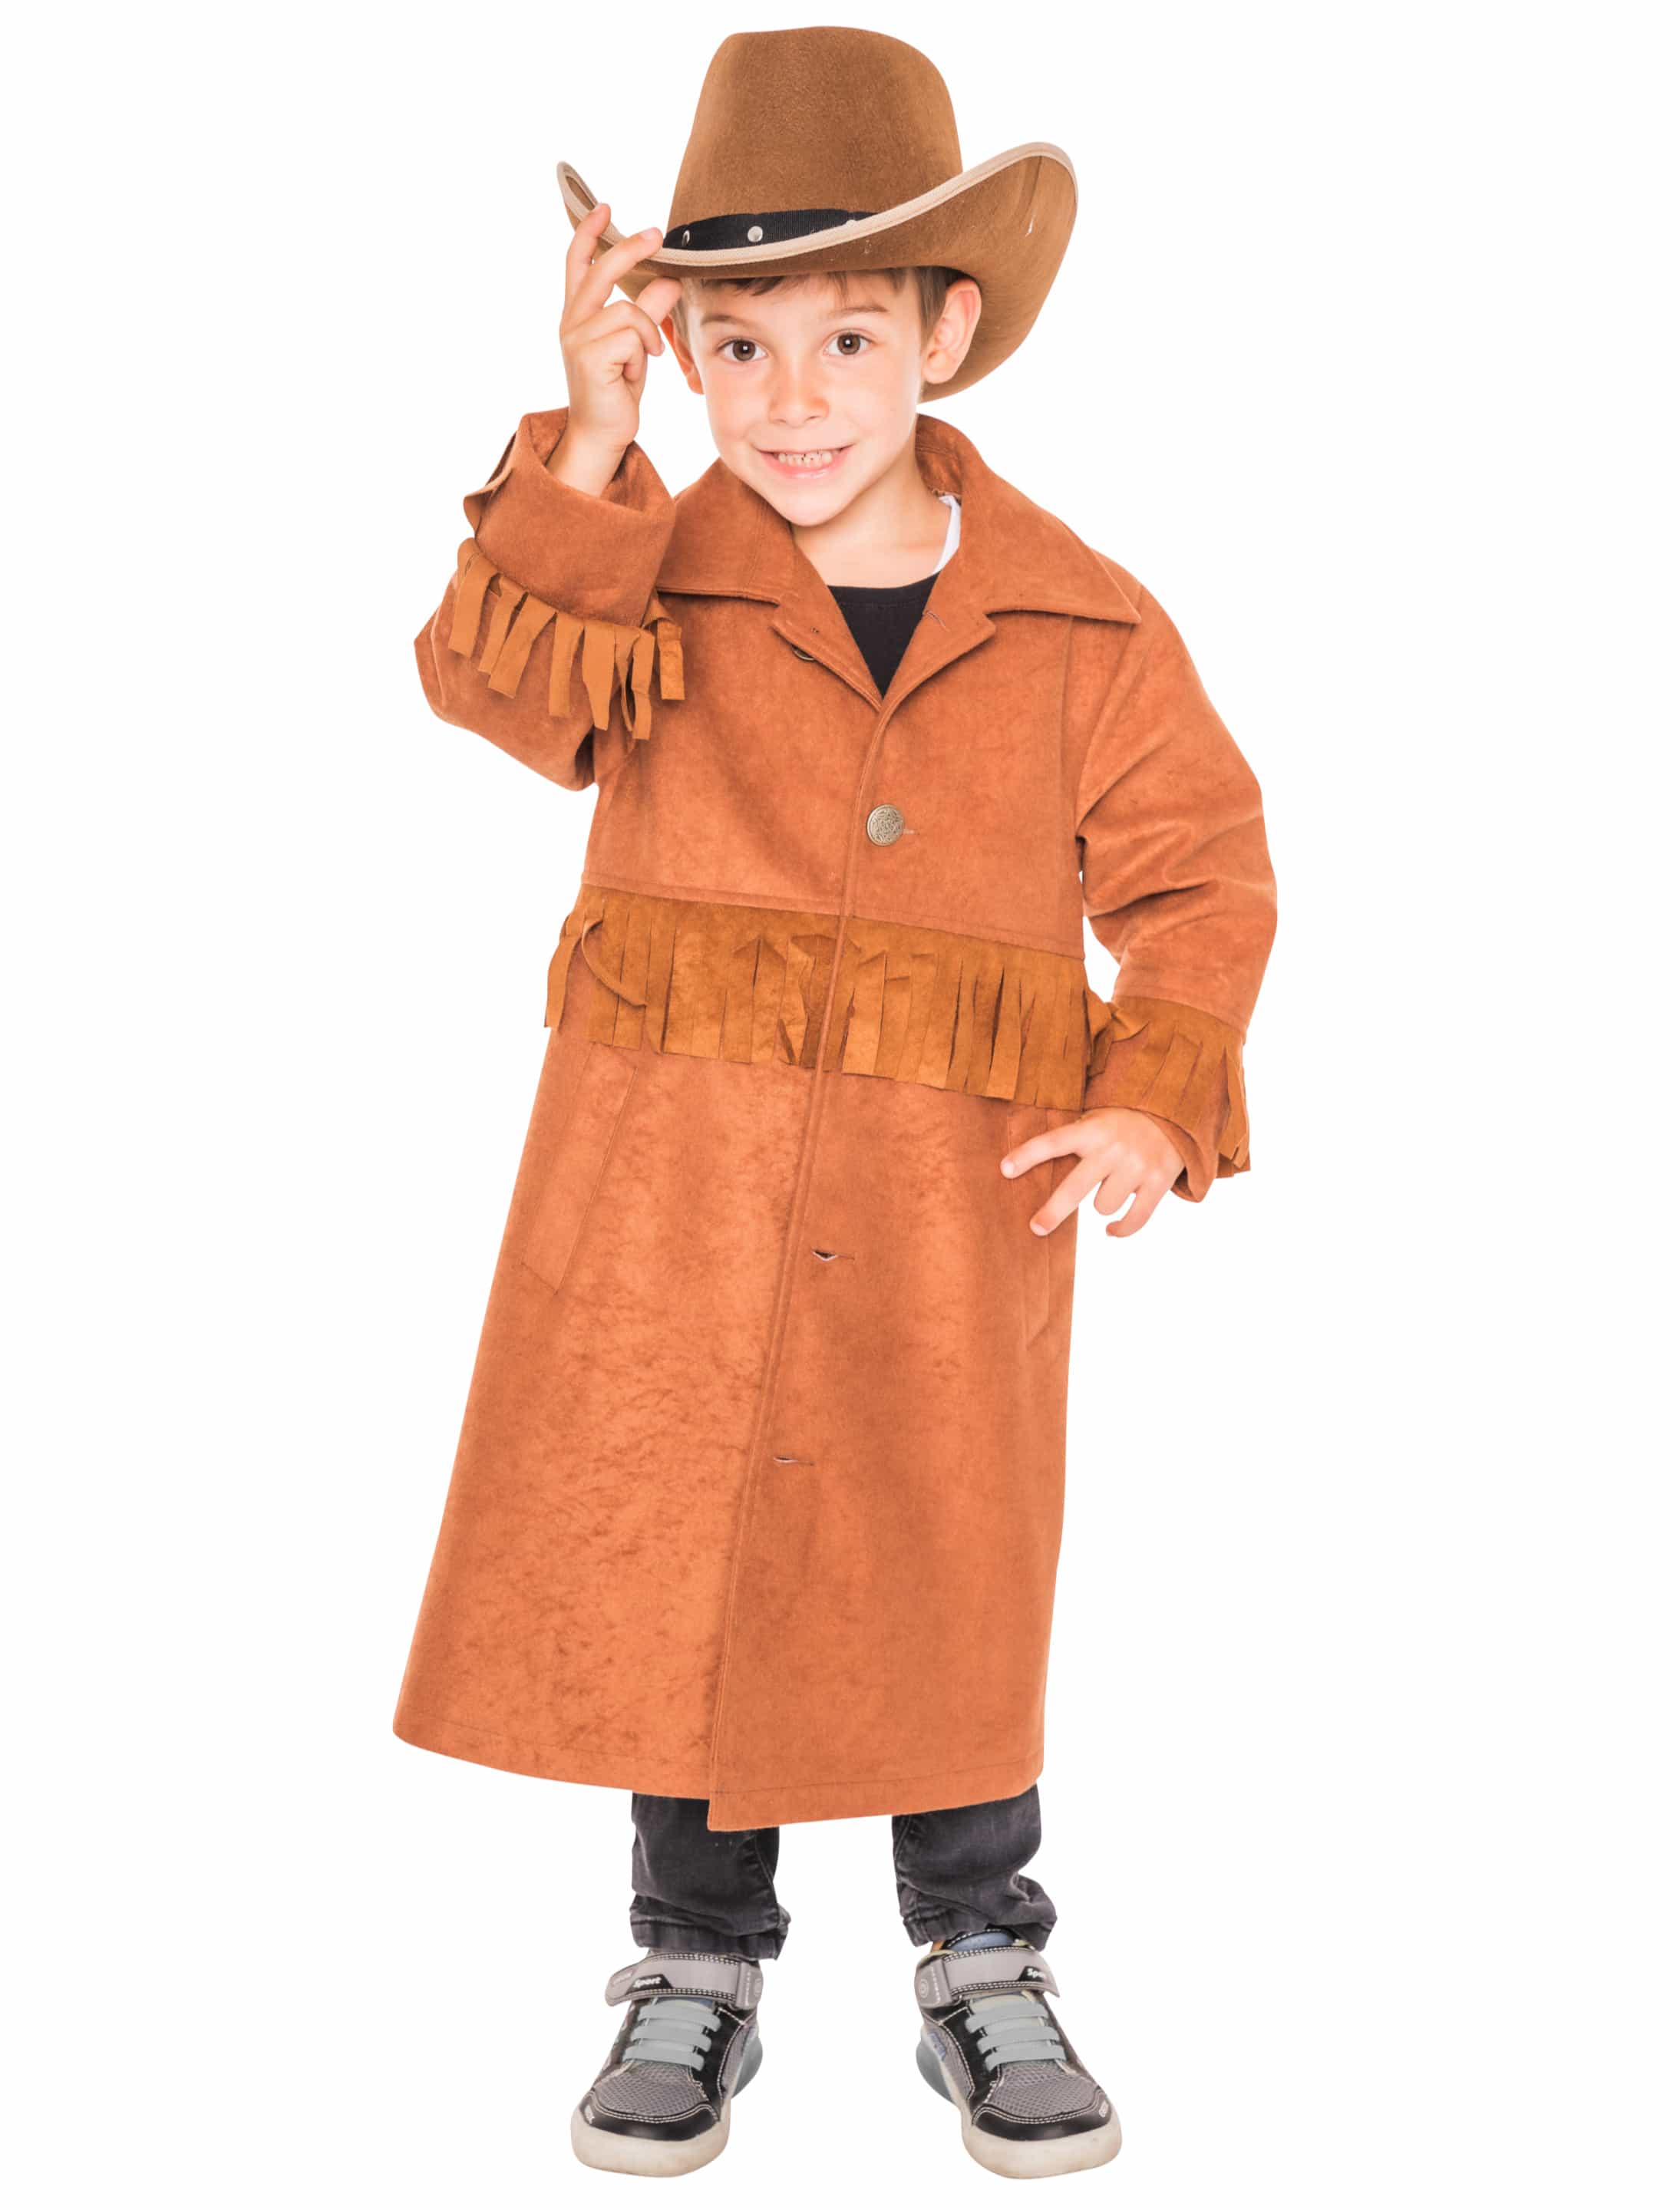 Mantel Cowboy Kinder braun 116-128